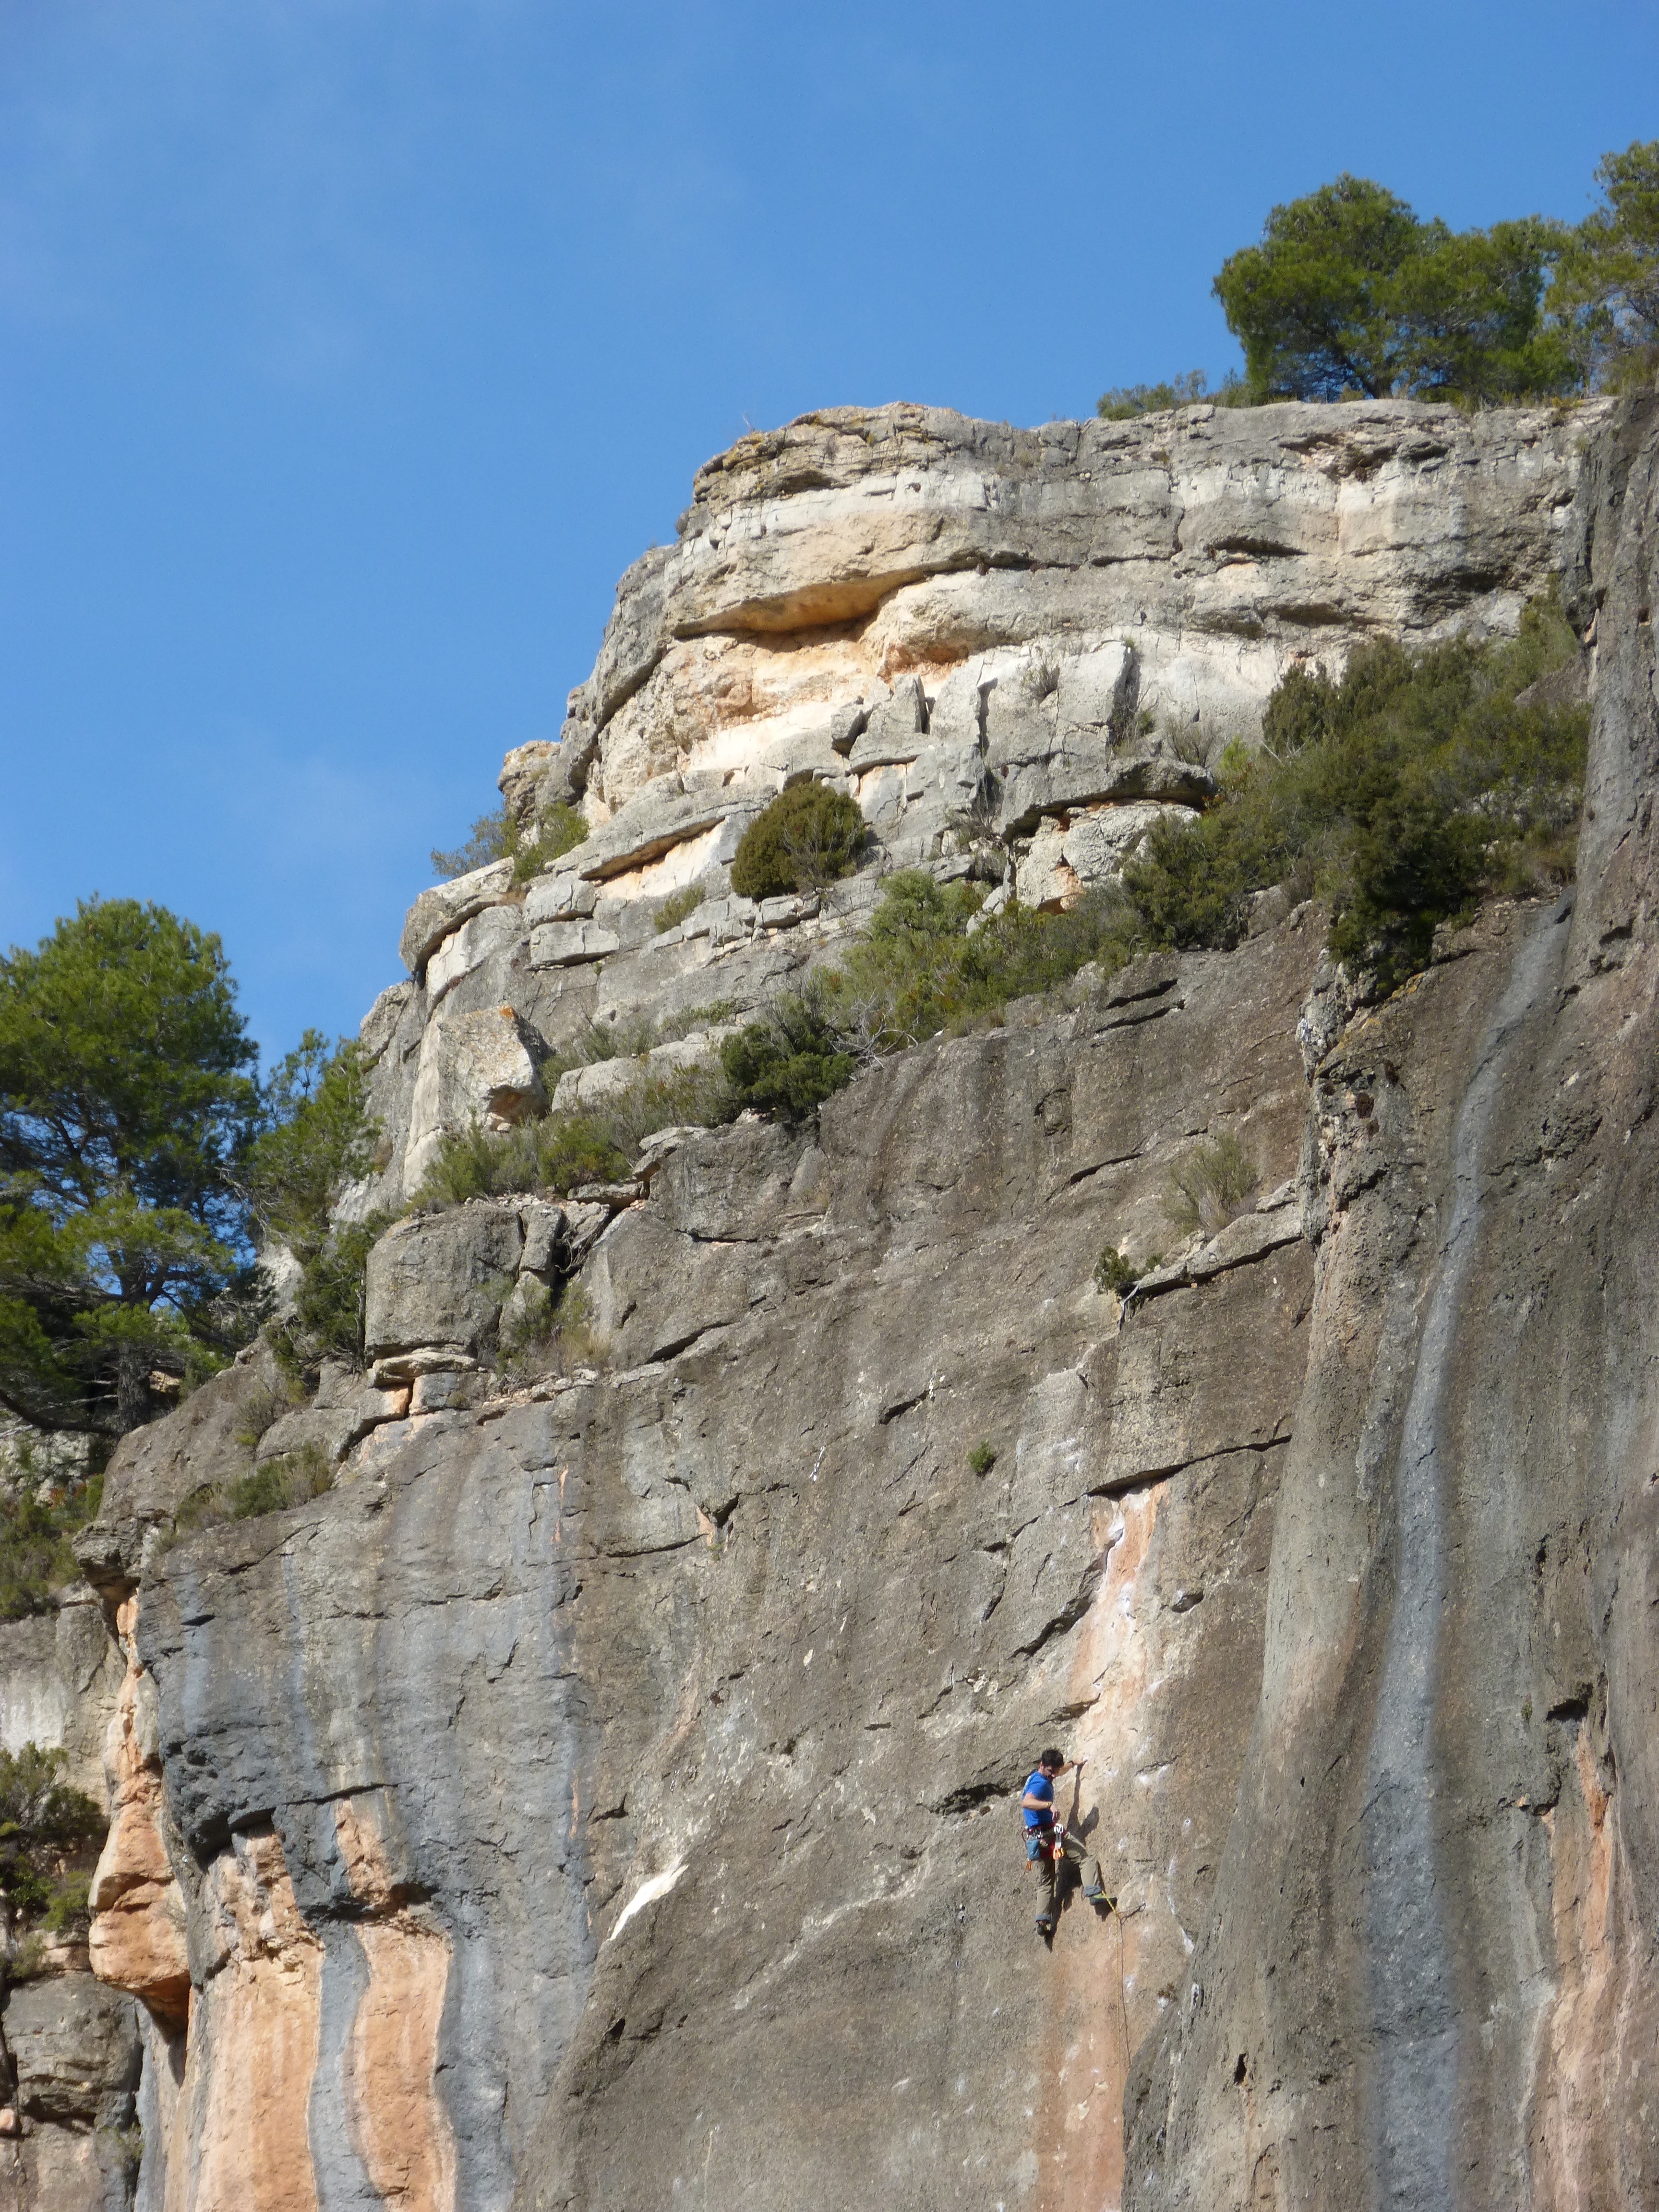 man wearing blue t-shirt climbing on rocky mountain under clear blue sky